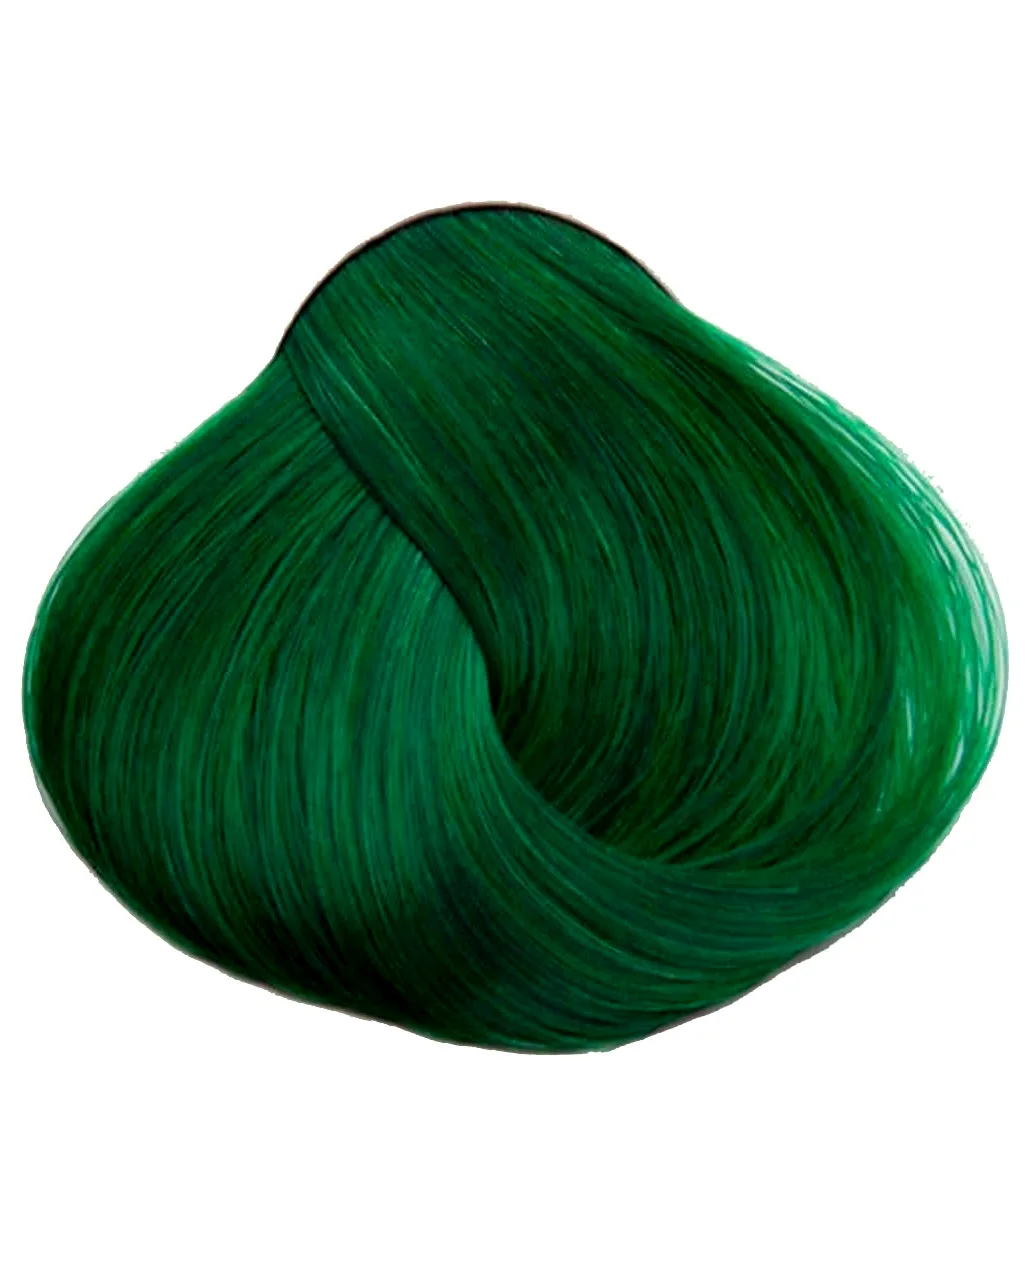 Apple Green hair